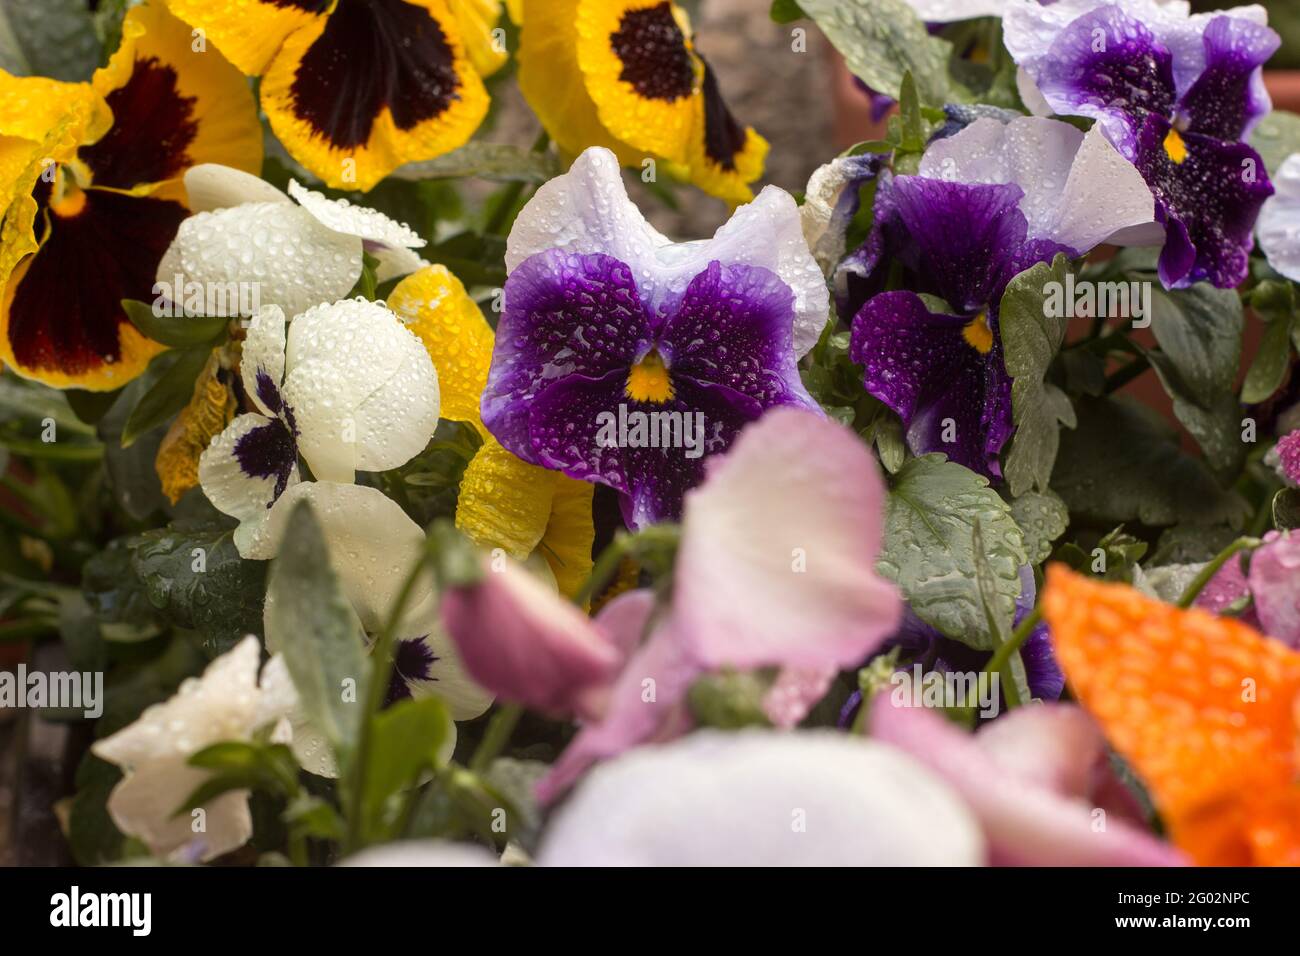 Viola wittrockiana pansy tricolor viola cornuta altaica with dew drops Stock Photo